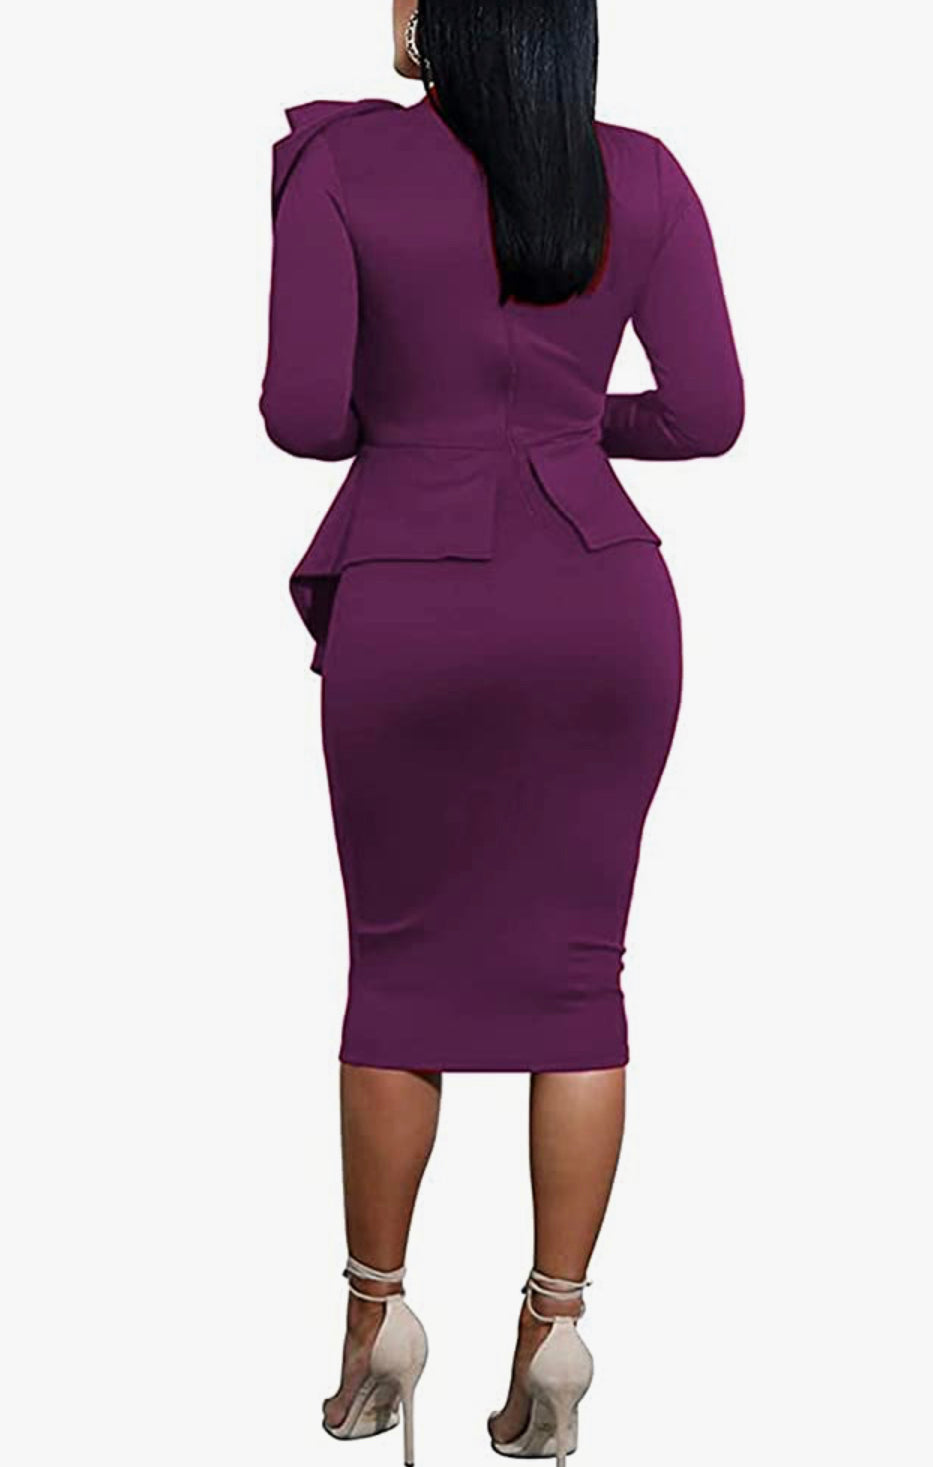 Peplum Short Sleeve Bow Knot Dress, US Sizes 4 - 20 (Small - 2XLarge) Rose or Purple